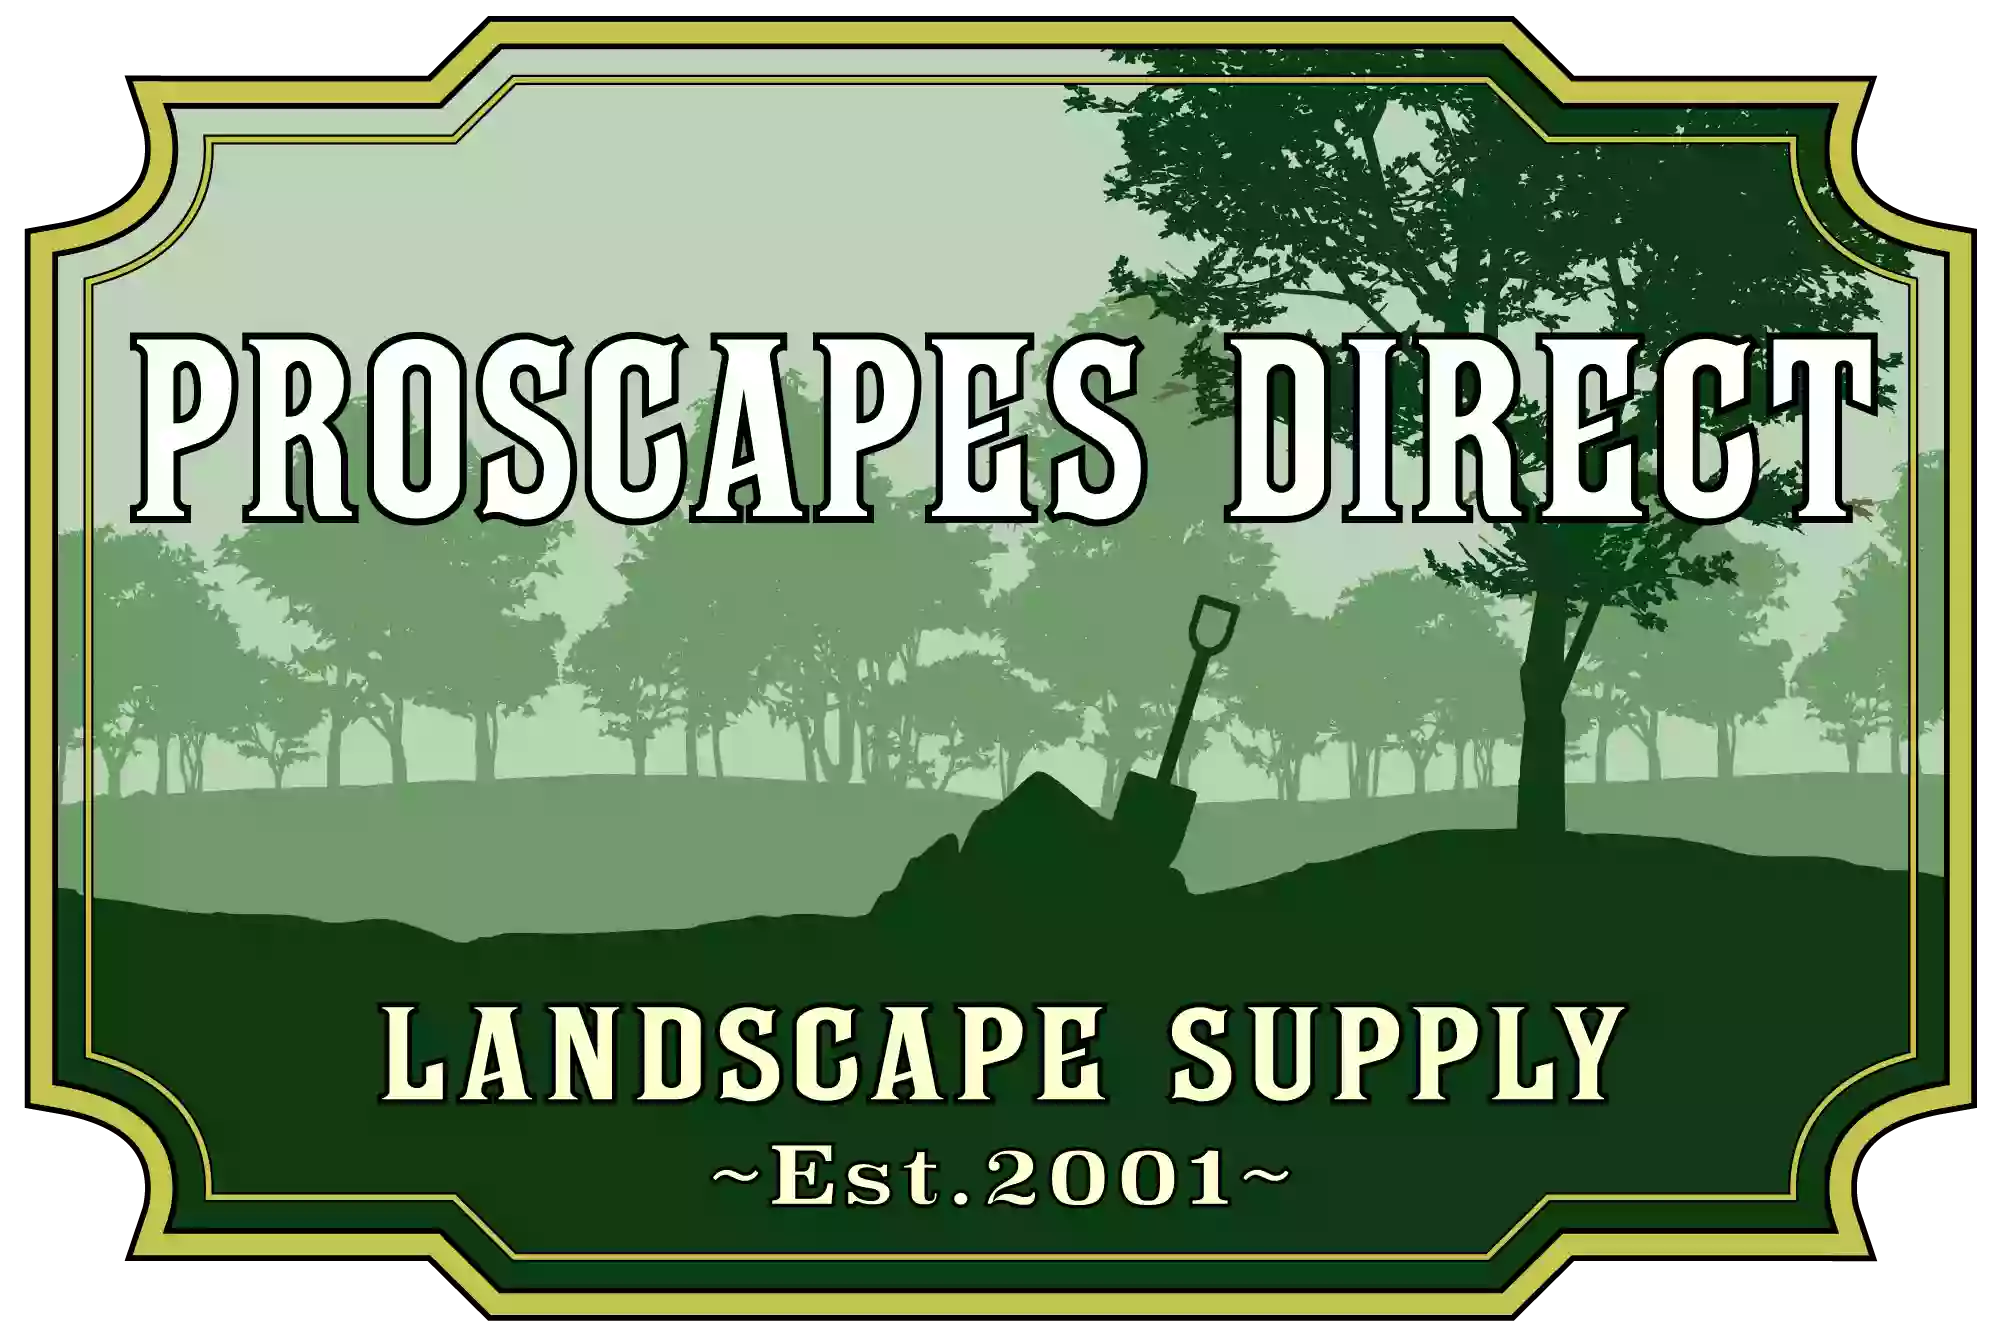 ProScapes Direct, LLC